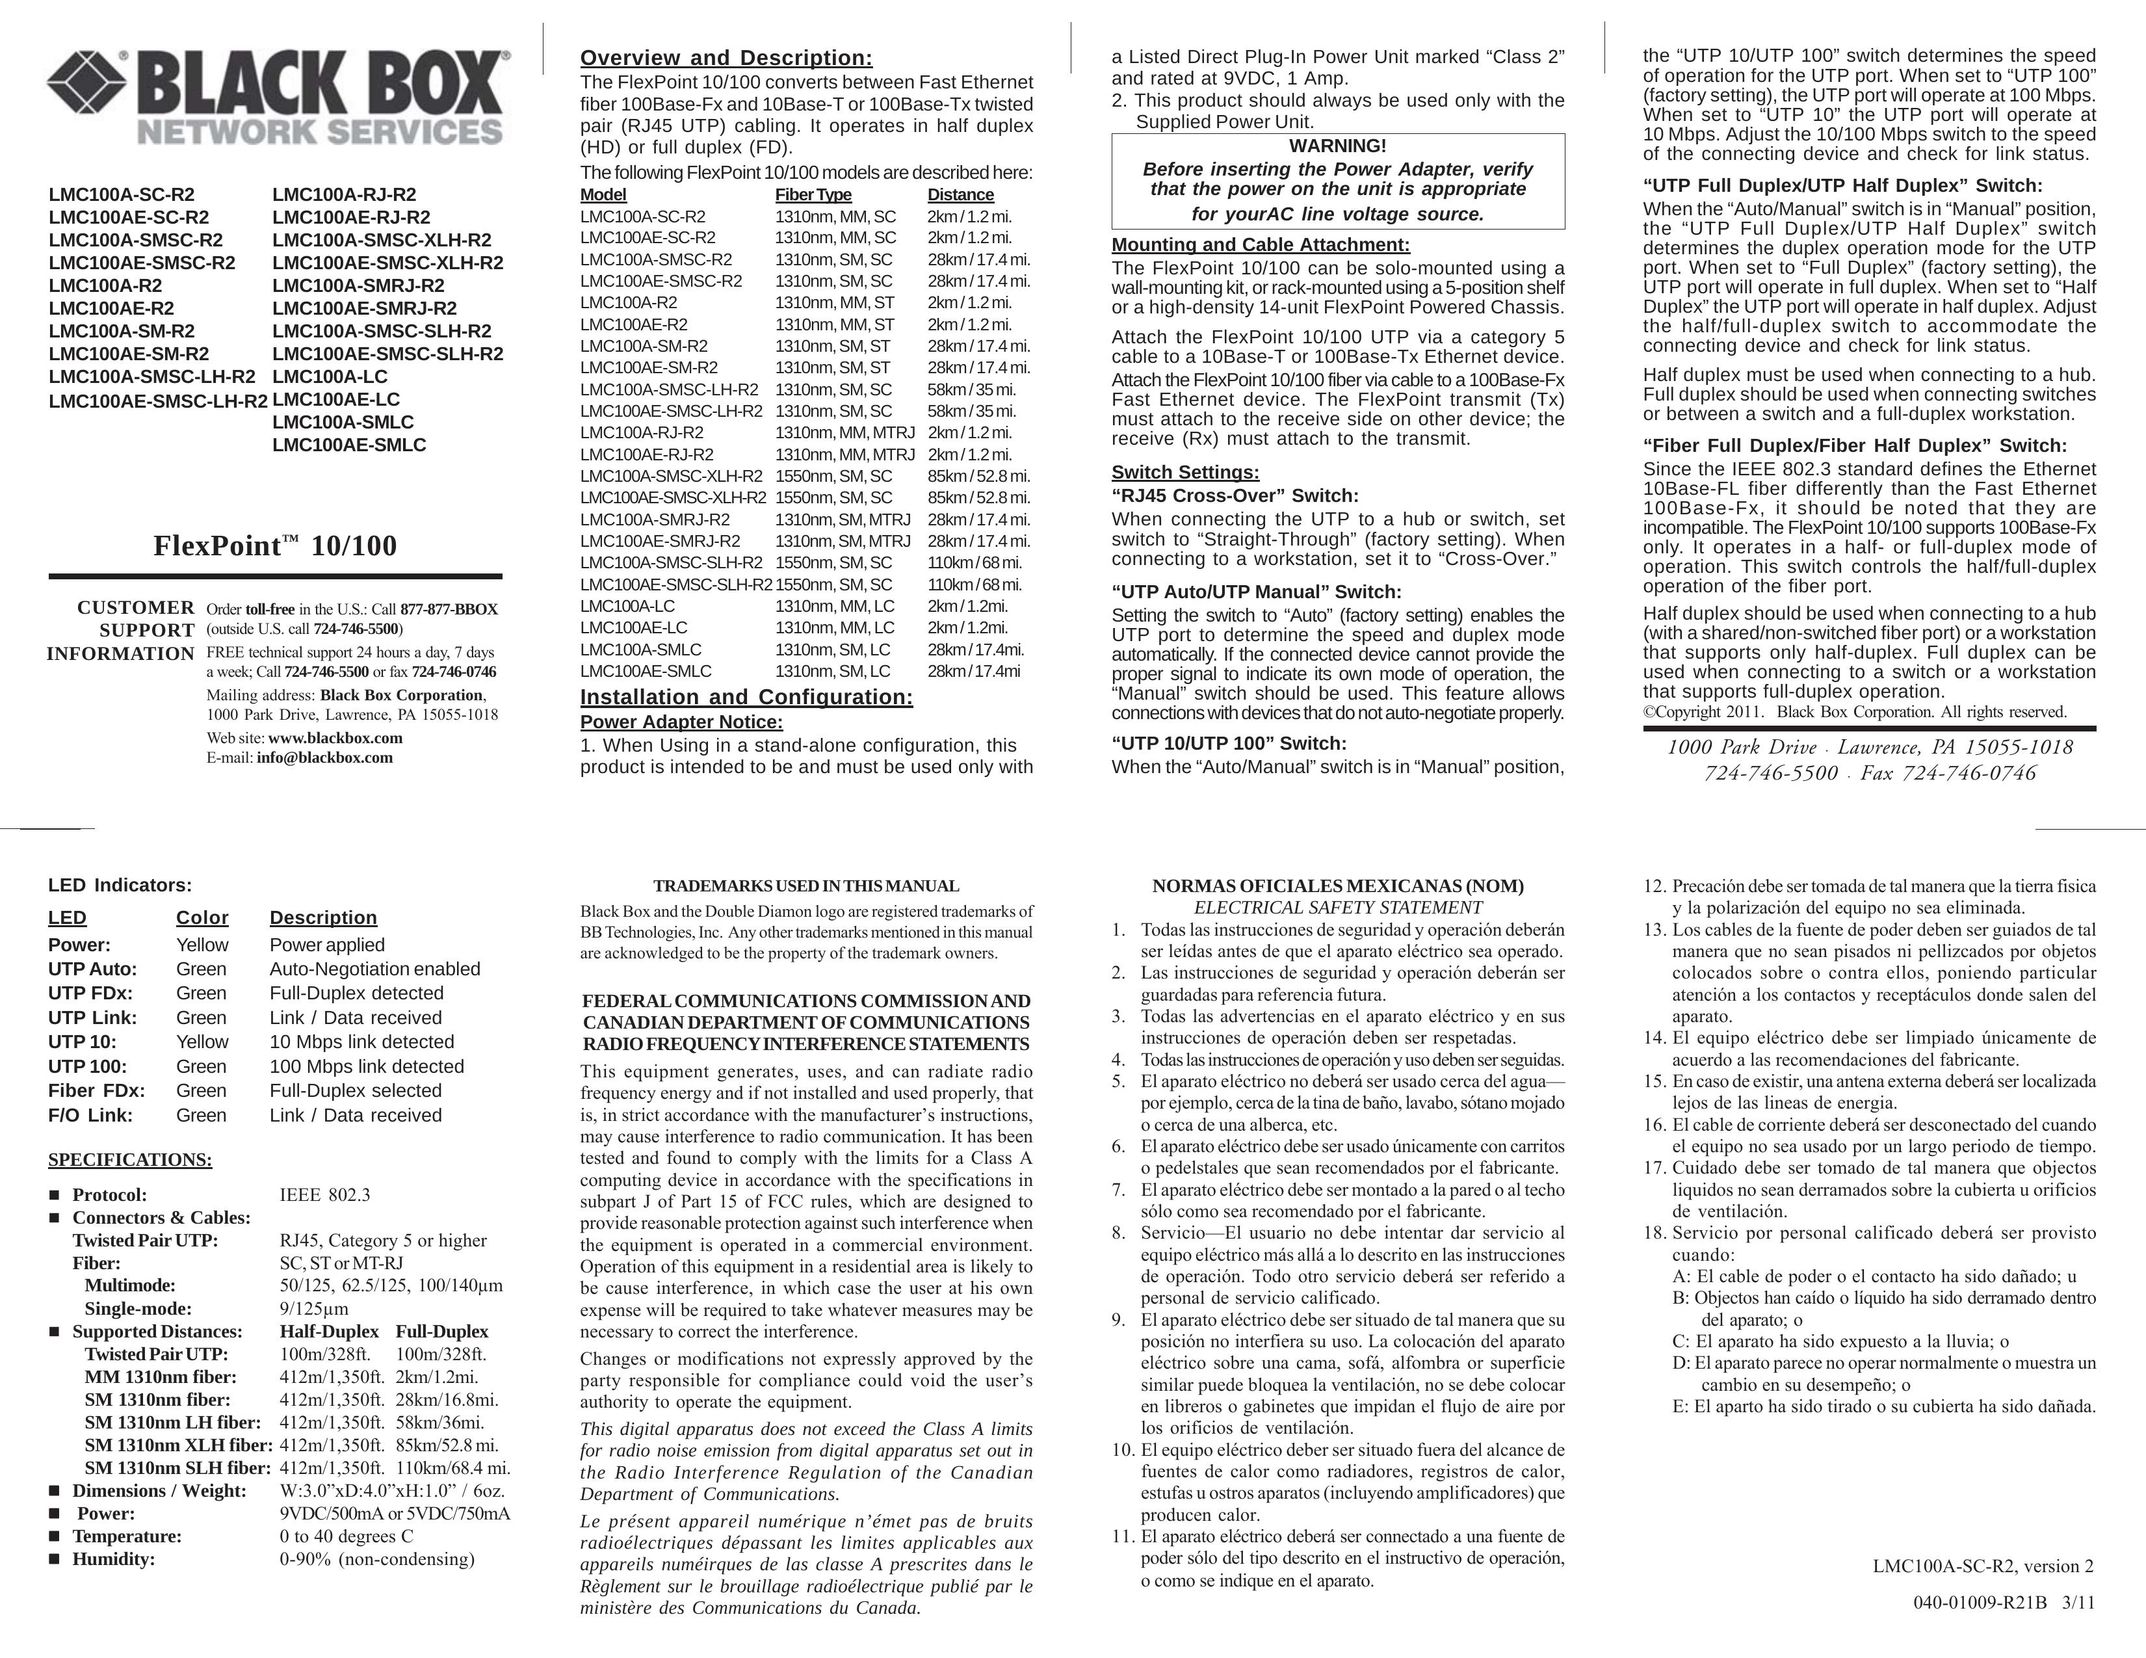 Black Box LMC100A-SMSC-R2 Network Cables User Manual